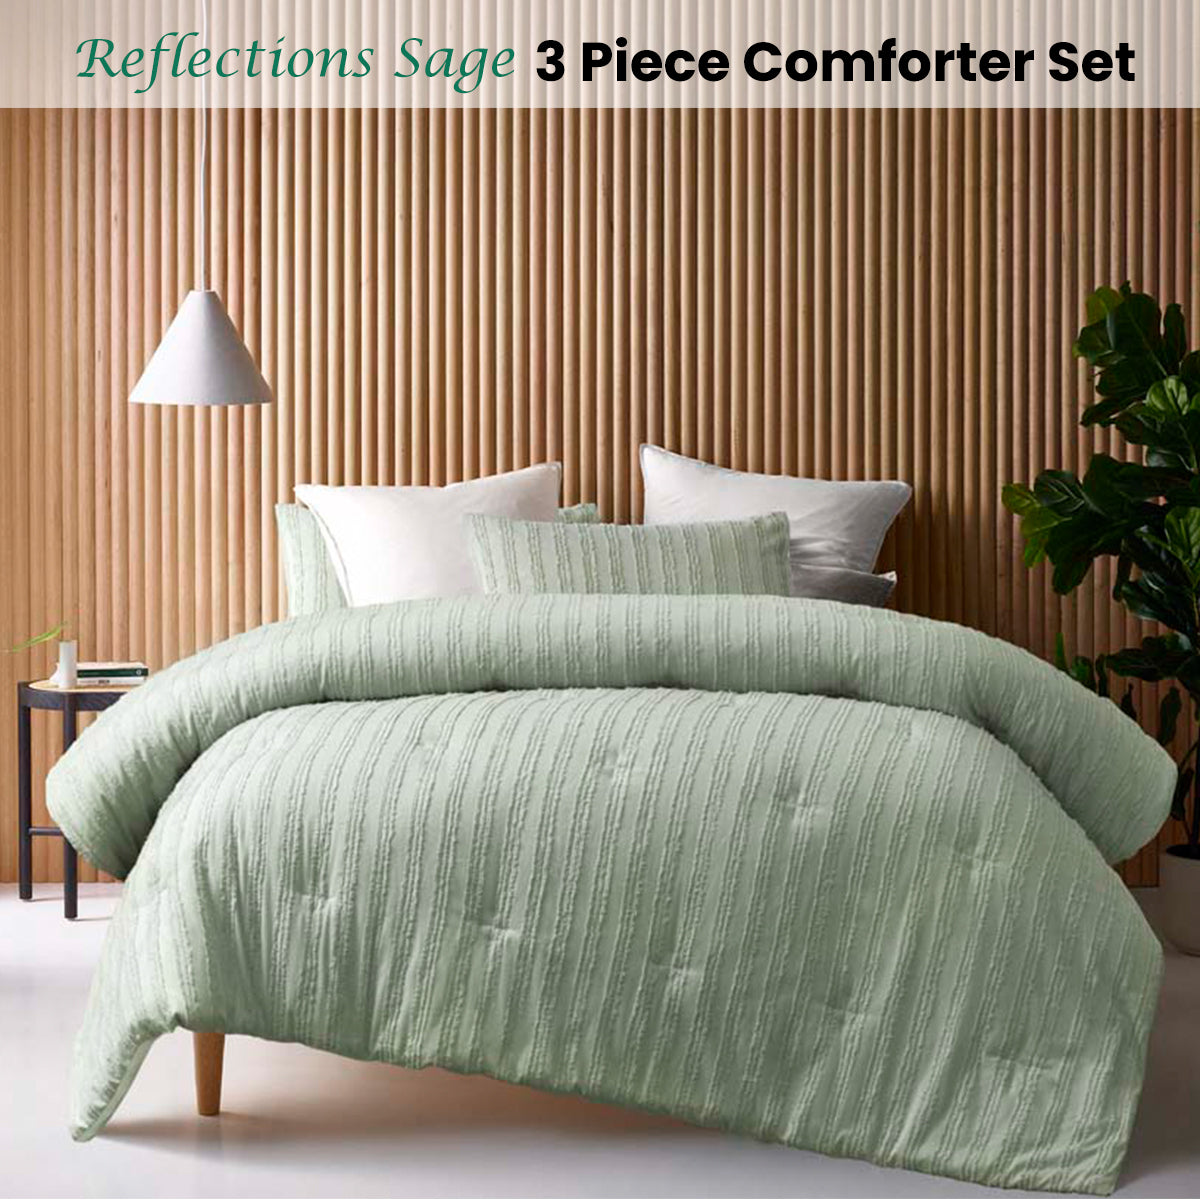 Queen 3 Piece Comforter Vintage Design - Sage